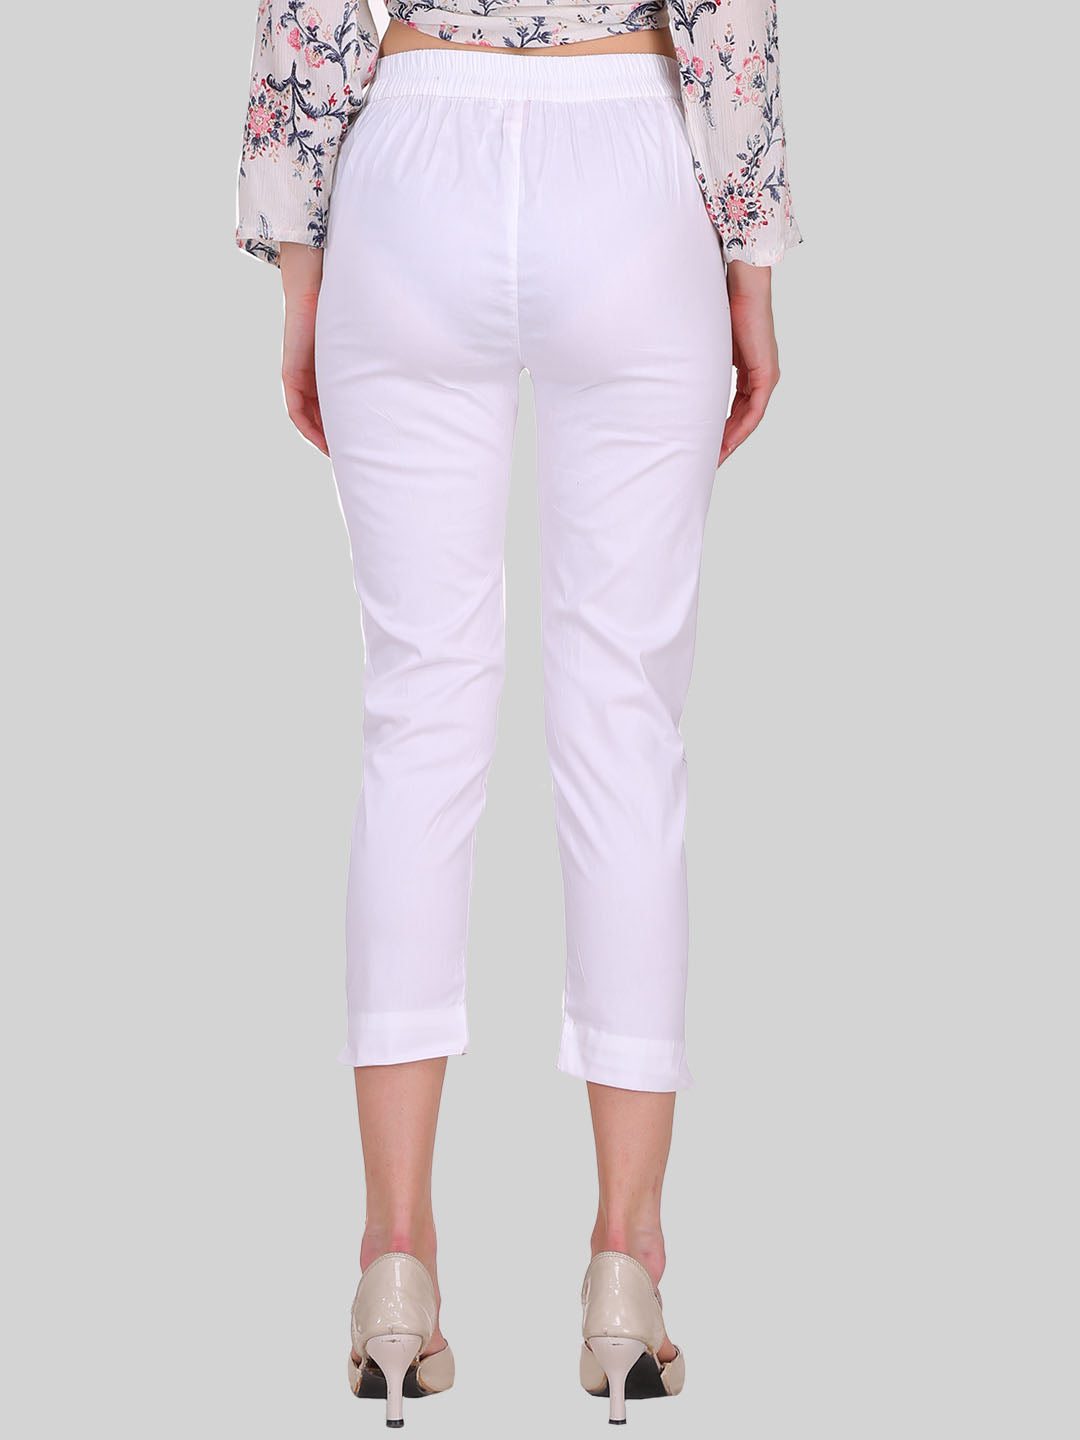 Saundarya Women's White Cropped Pants